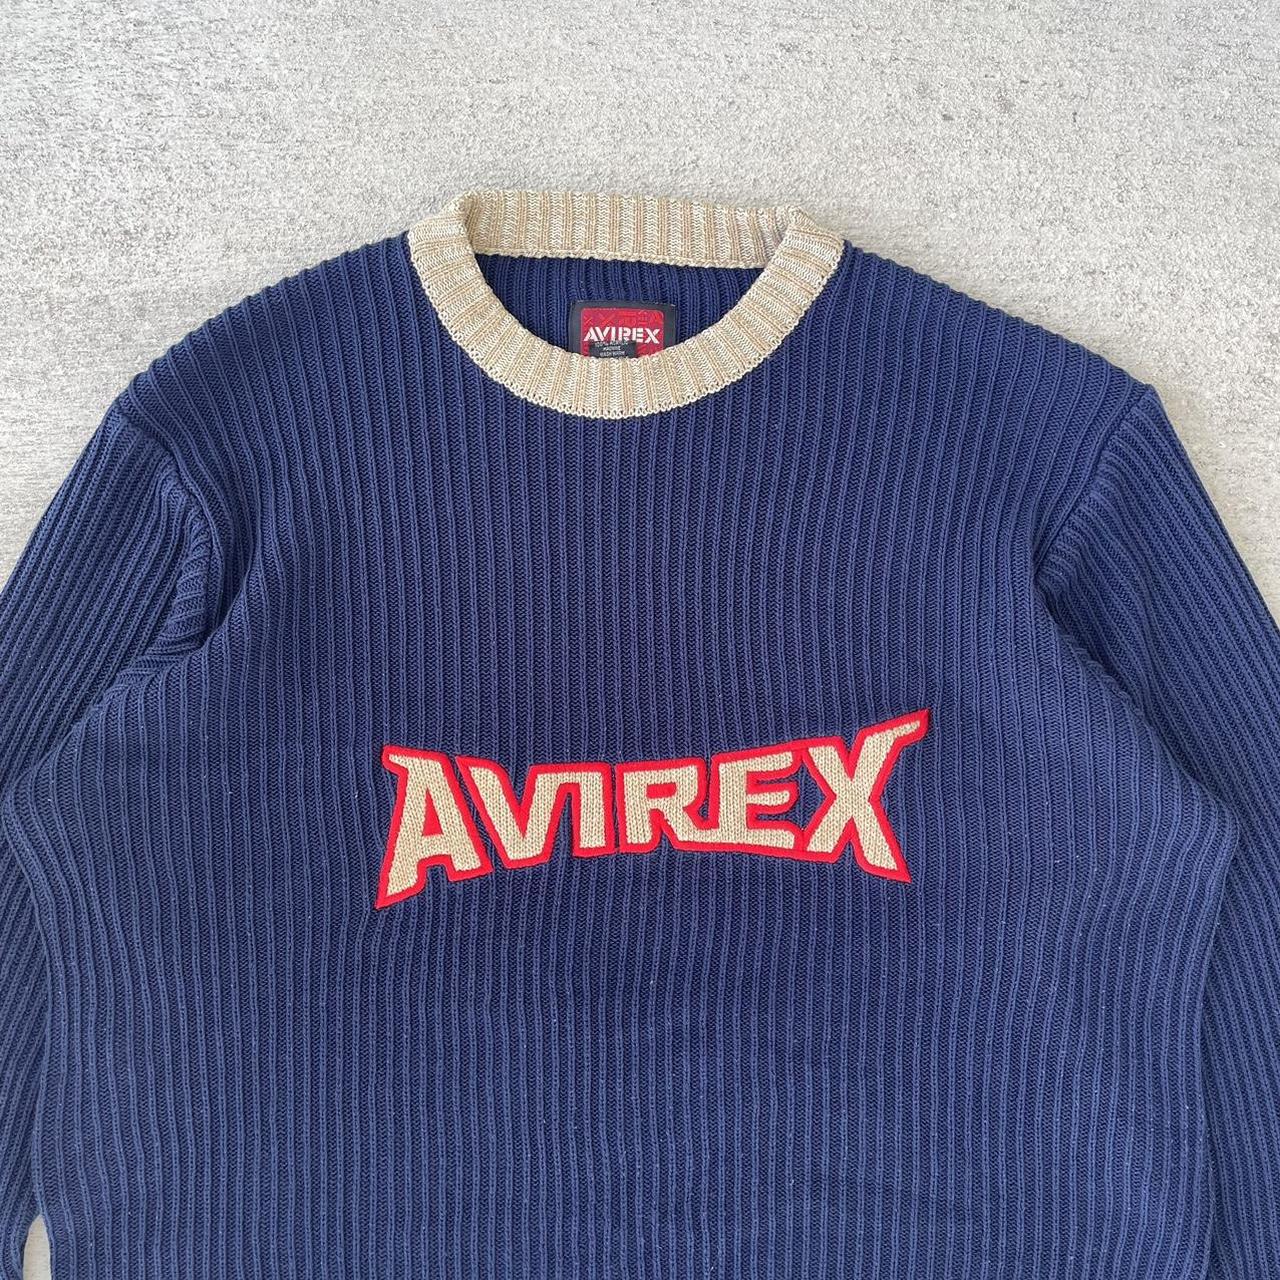 Avirex Knit Sweater Vintage Avirex Multi Colored... - Depop